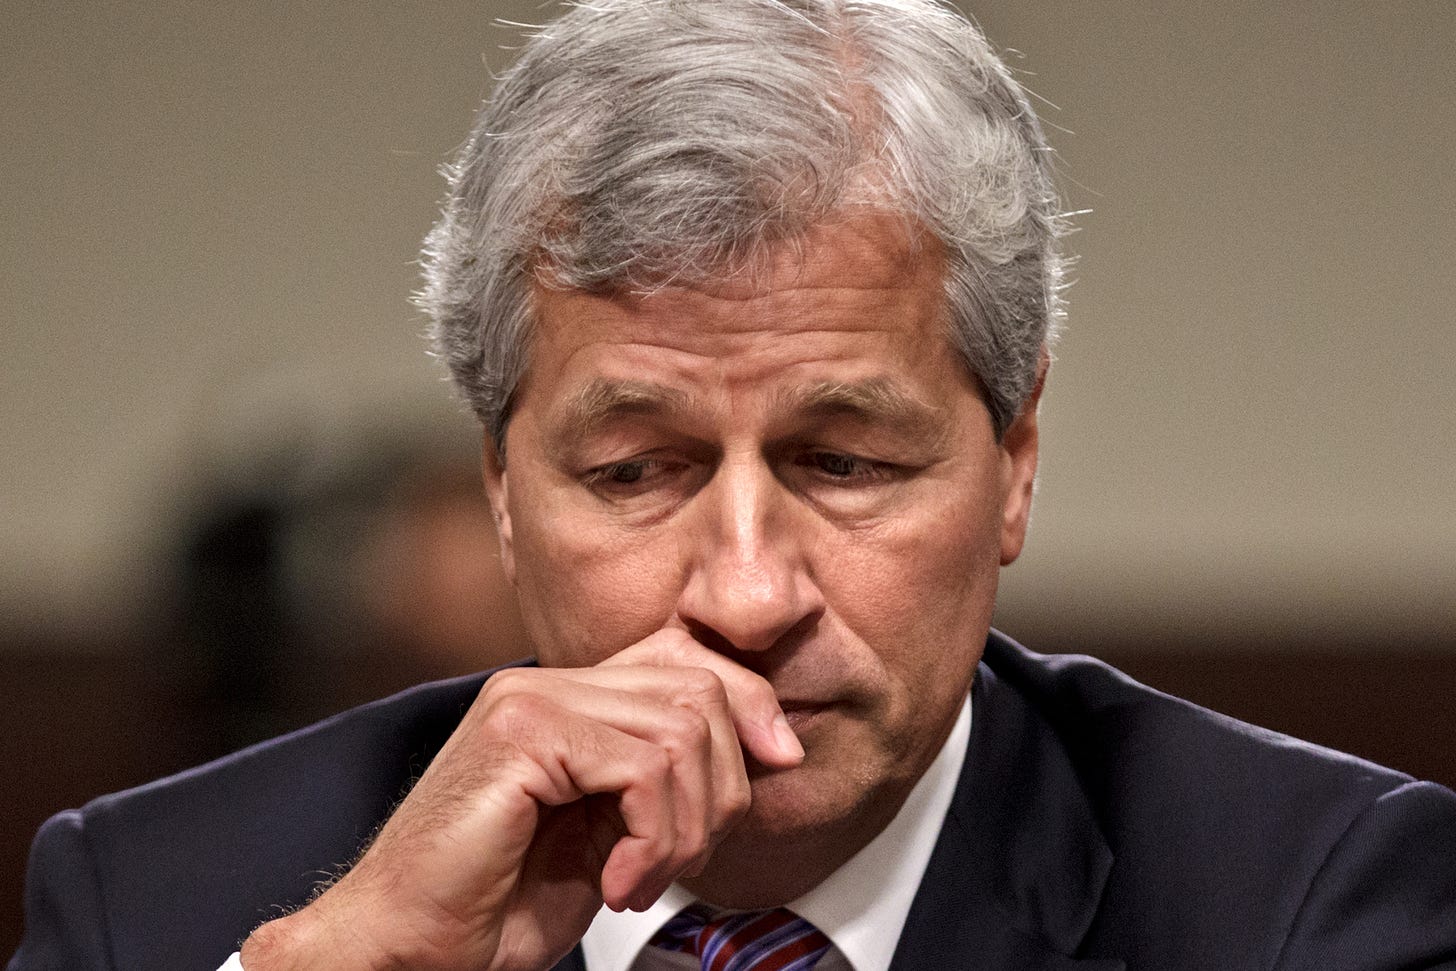 JP Morgan Chase's Jamie Dimon warns against government shutdown